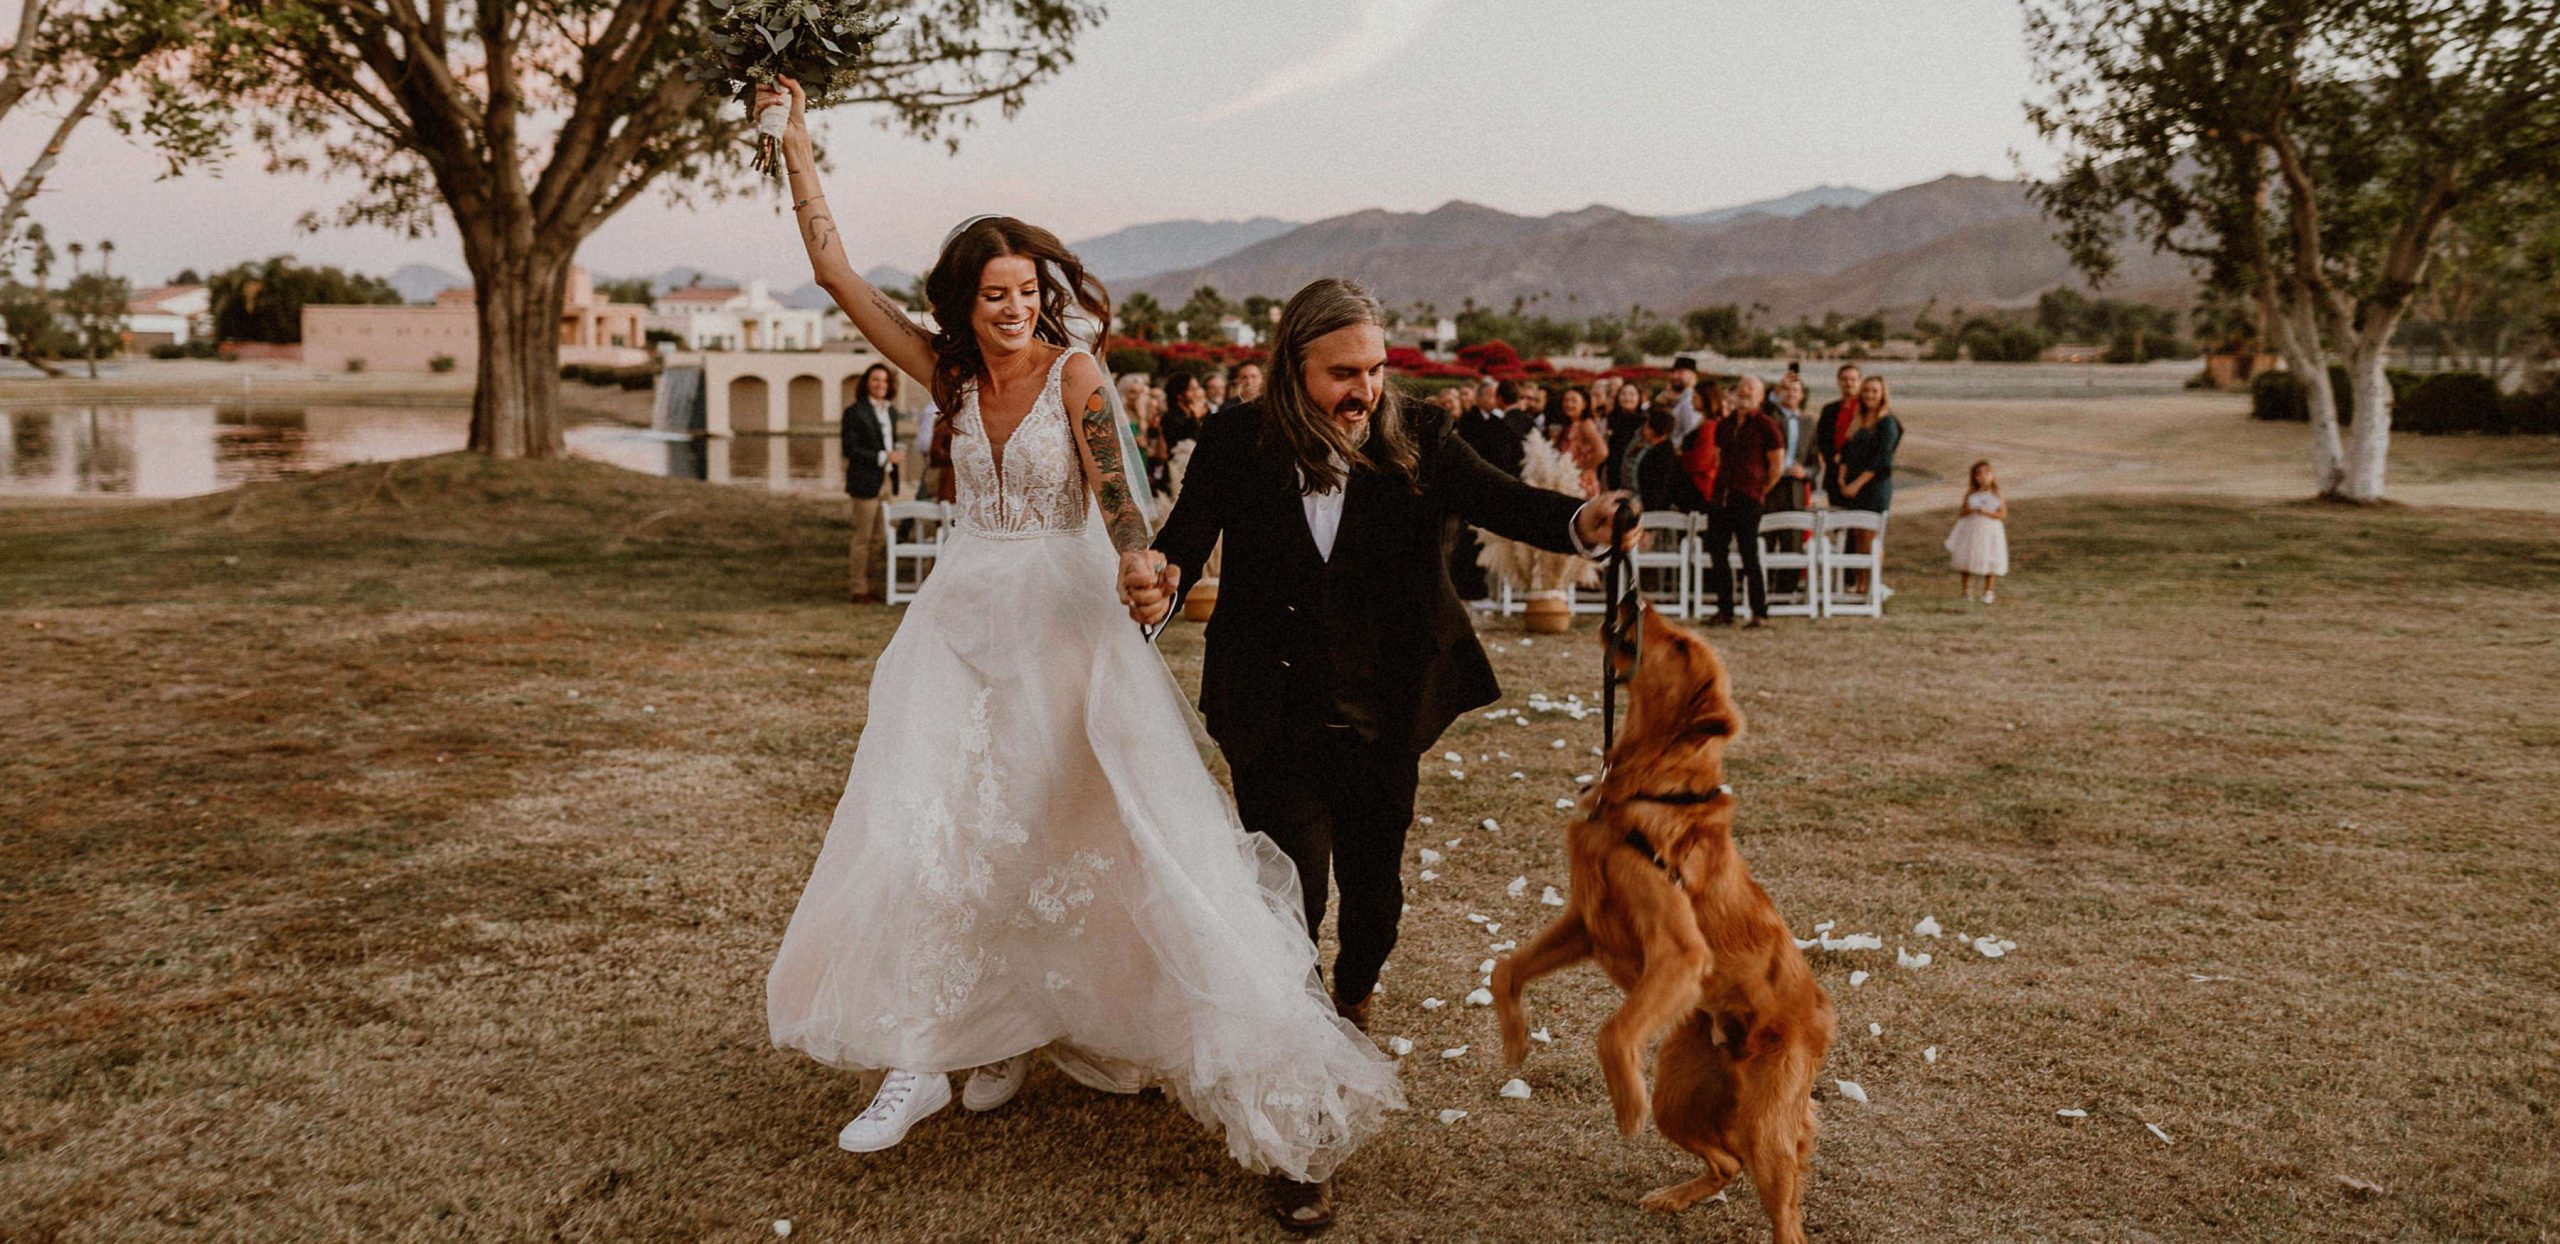 Los Angeles Wedding Photographers | Gina & Ryan Photography